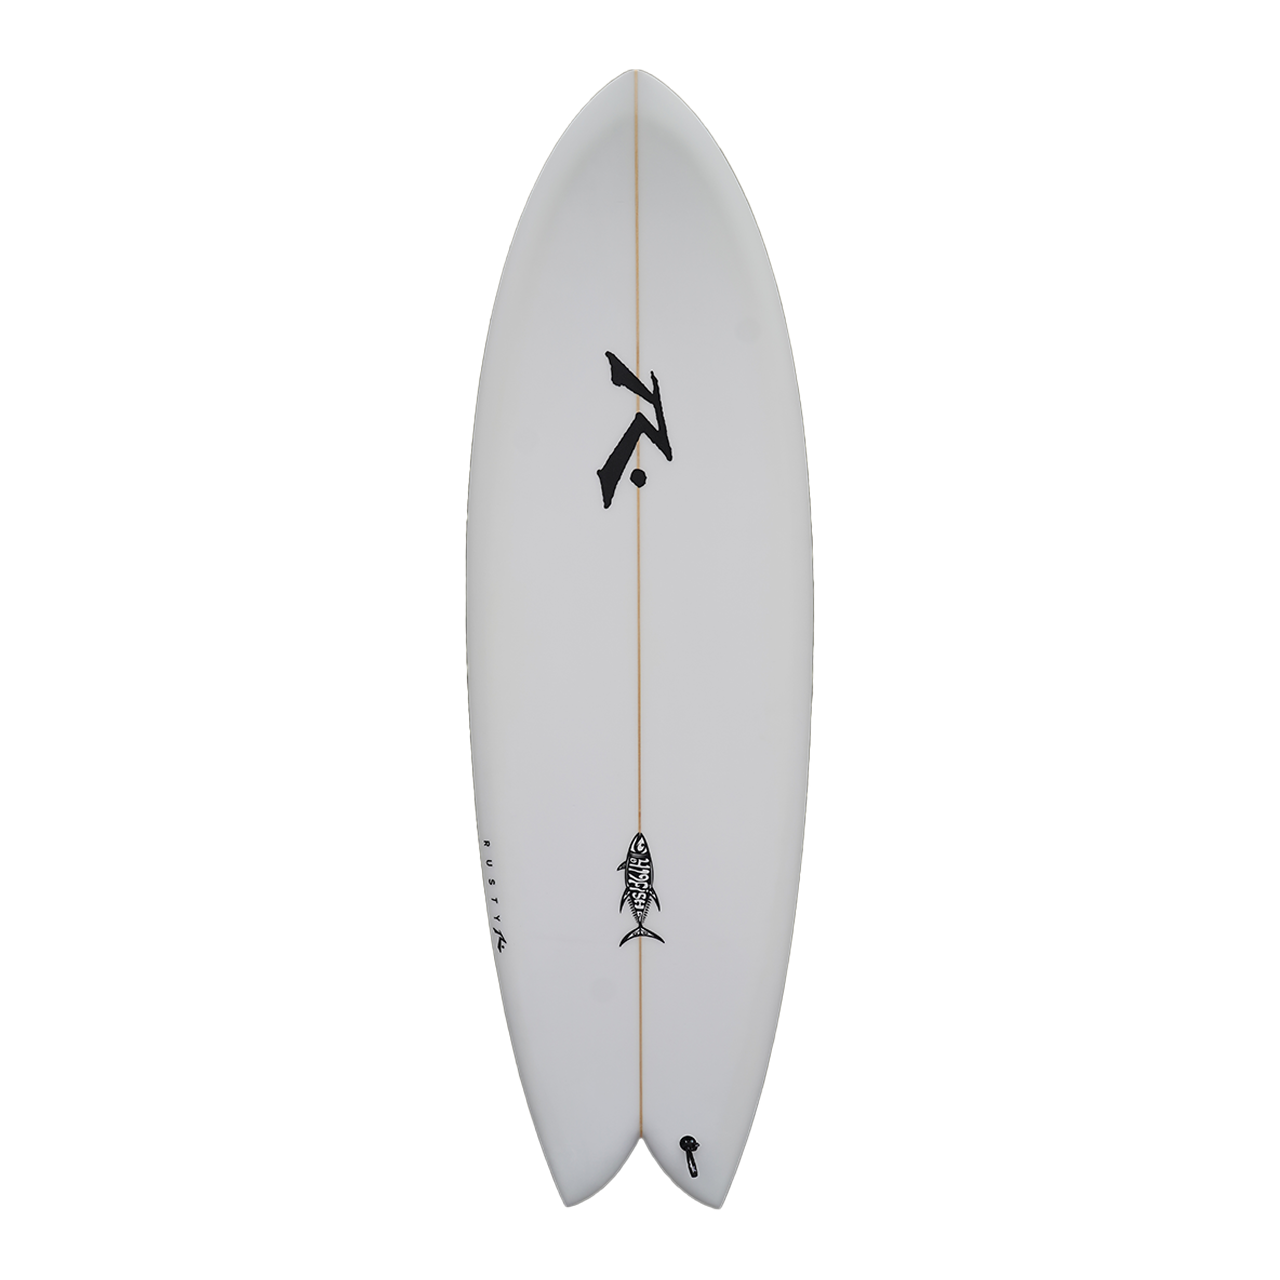 419fish - Alternative - Rusty Surfboards - Top View 